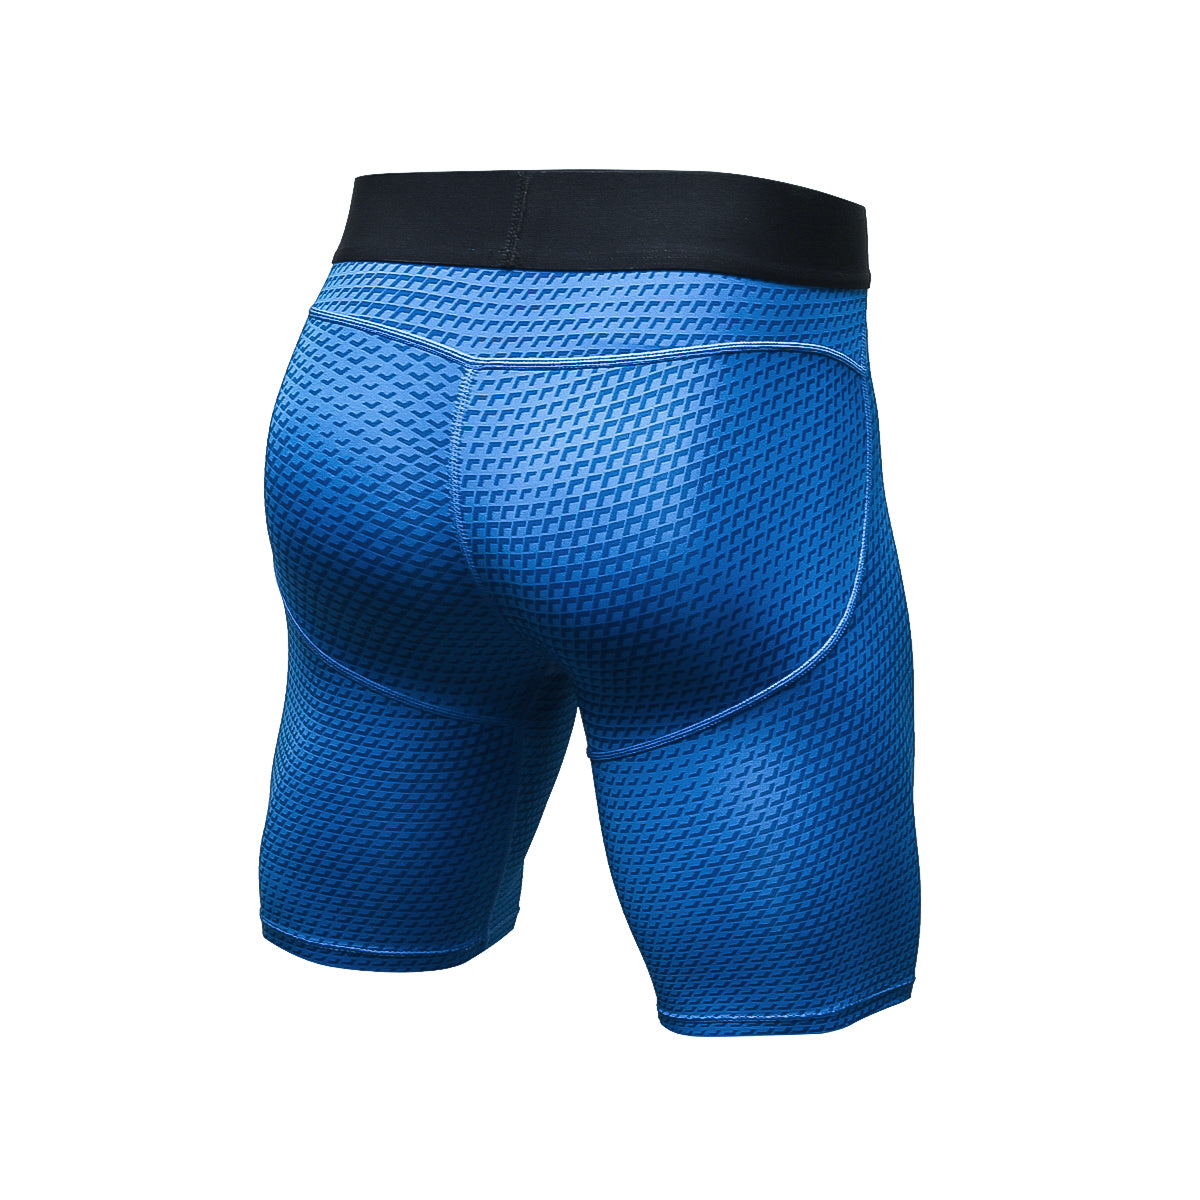 Mens Compression Shorts 3D Snake Skin Printed Running Tights Quick Dry Workout Shorts Yoga Gym Base Layer LANBAOSI